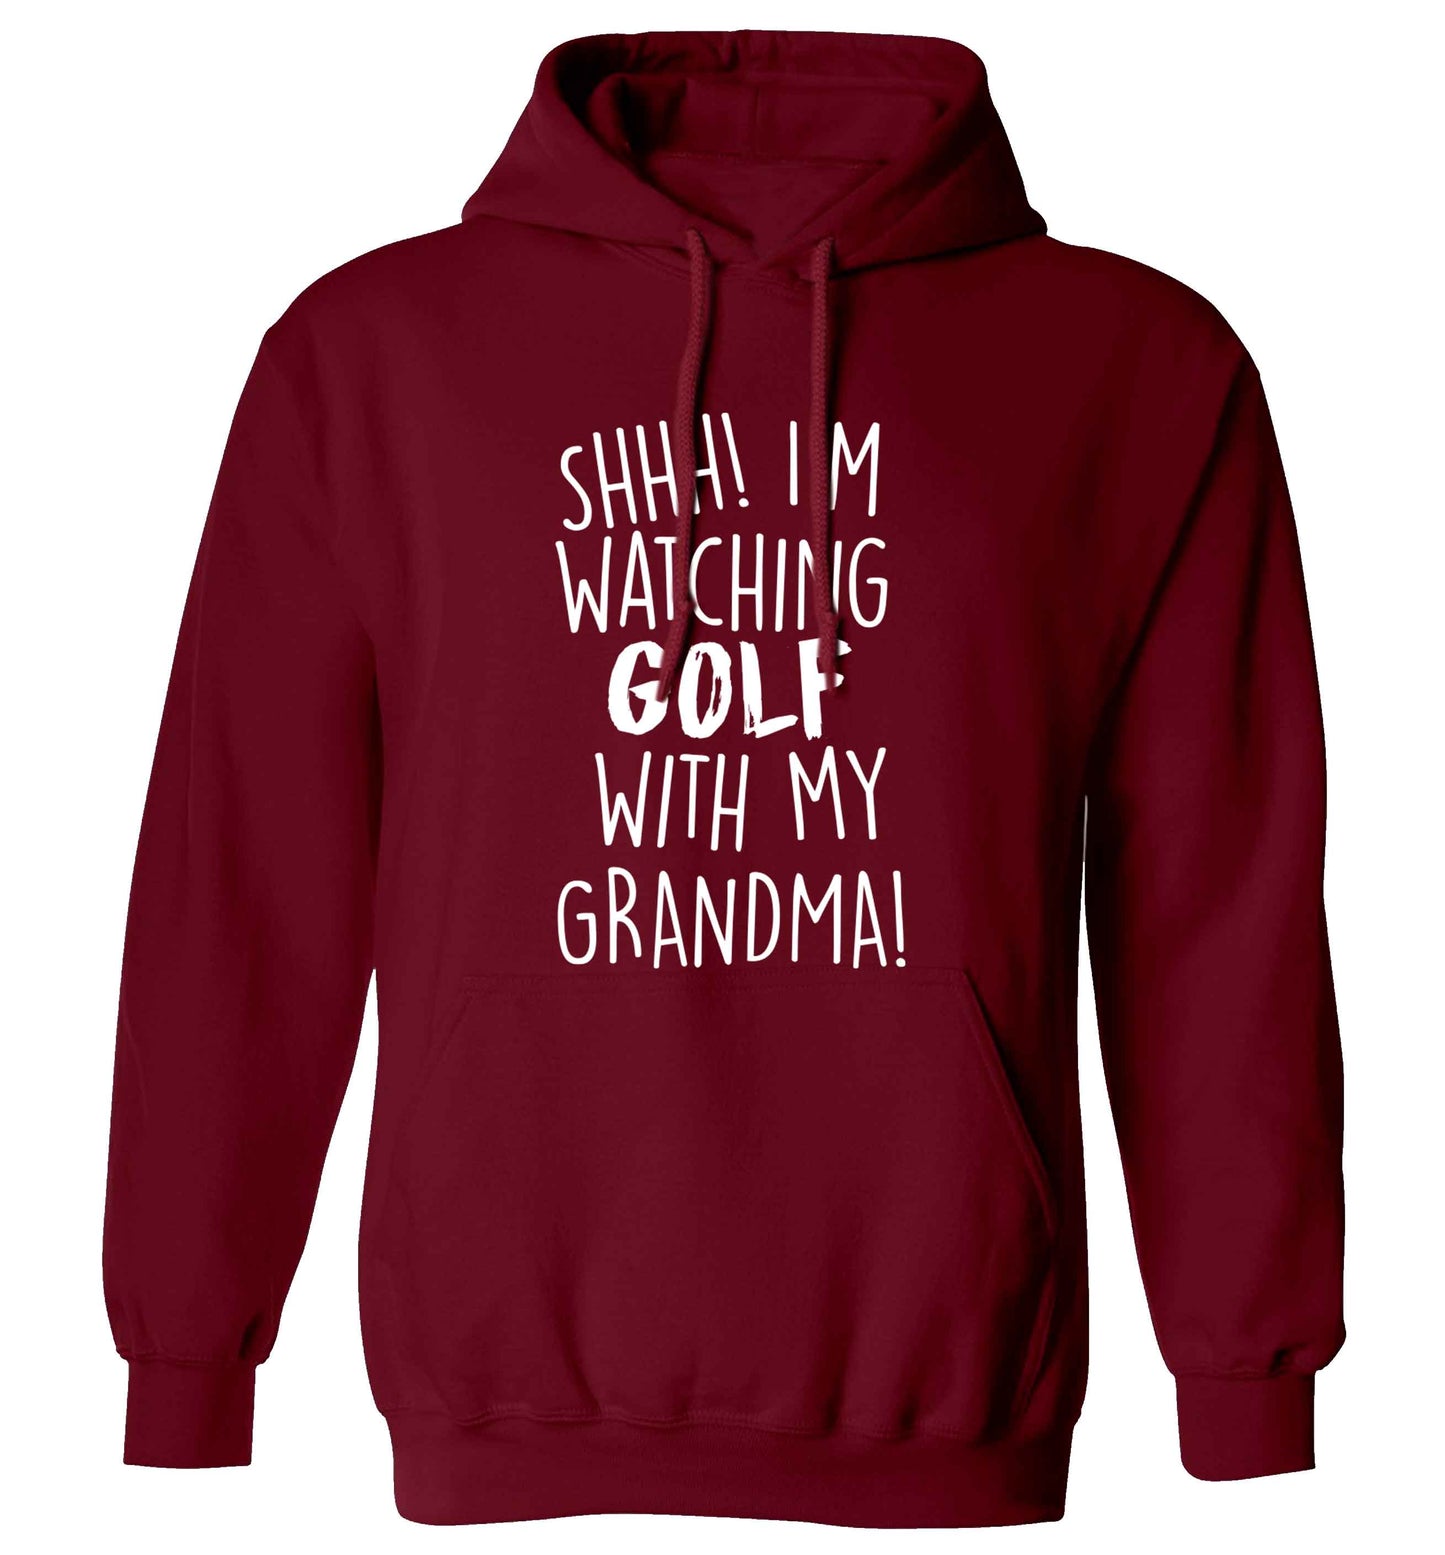 Shh I'm watching golf with my grandma adults unisex maroon hoodie 2XL